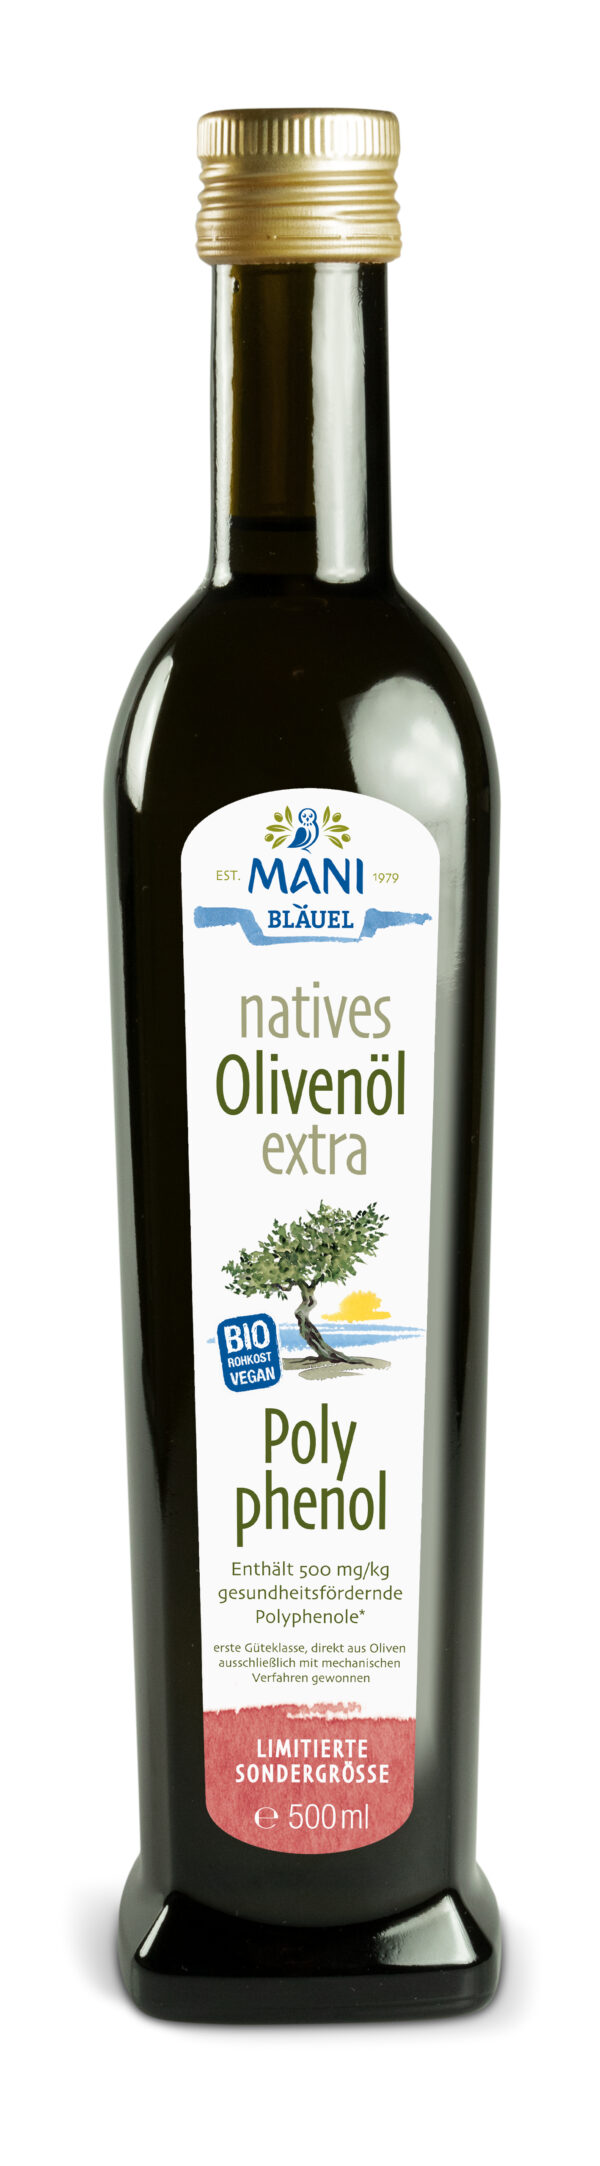 MANI® MANI natives Olivenöl extra, Polyphenol, bio - limitierte Sondergröße 500ml